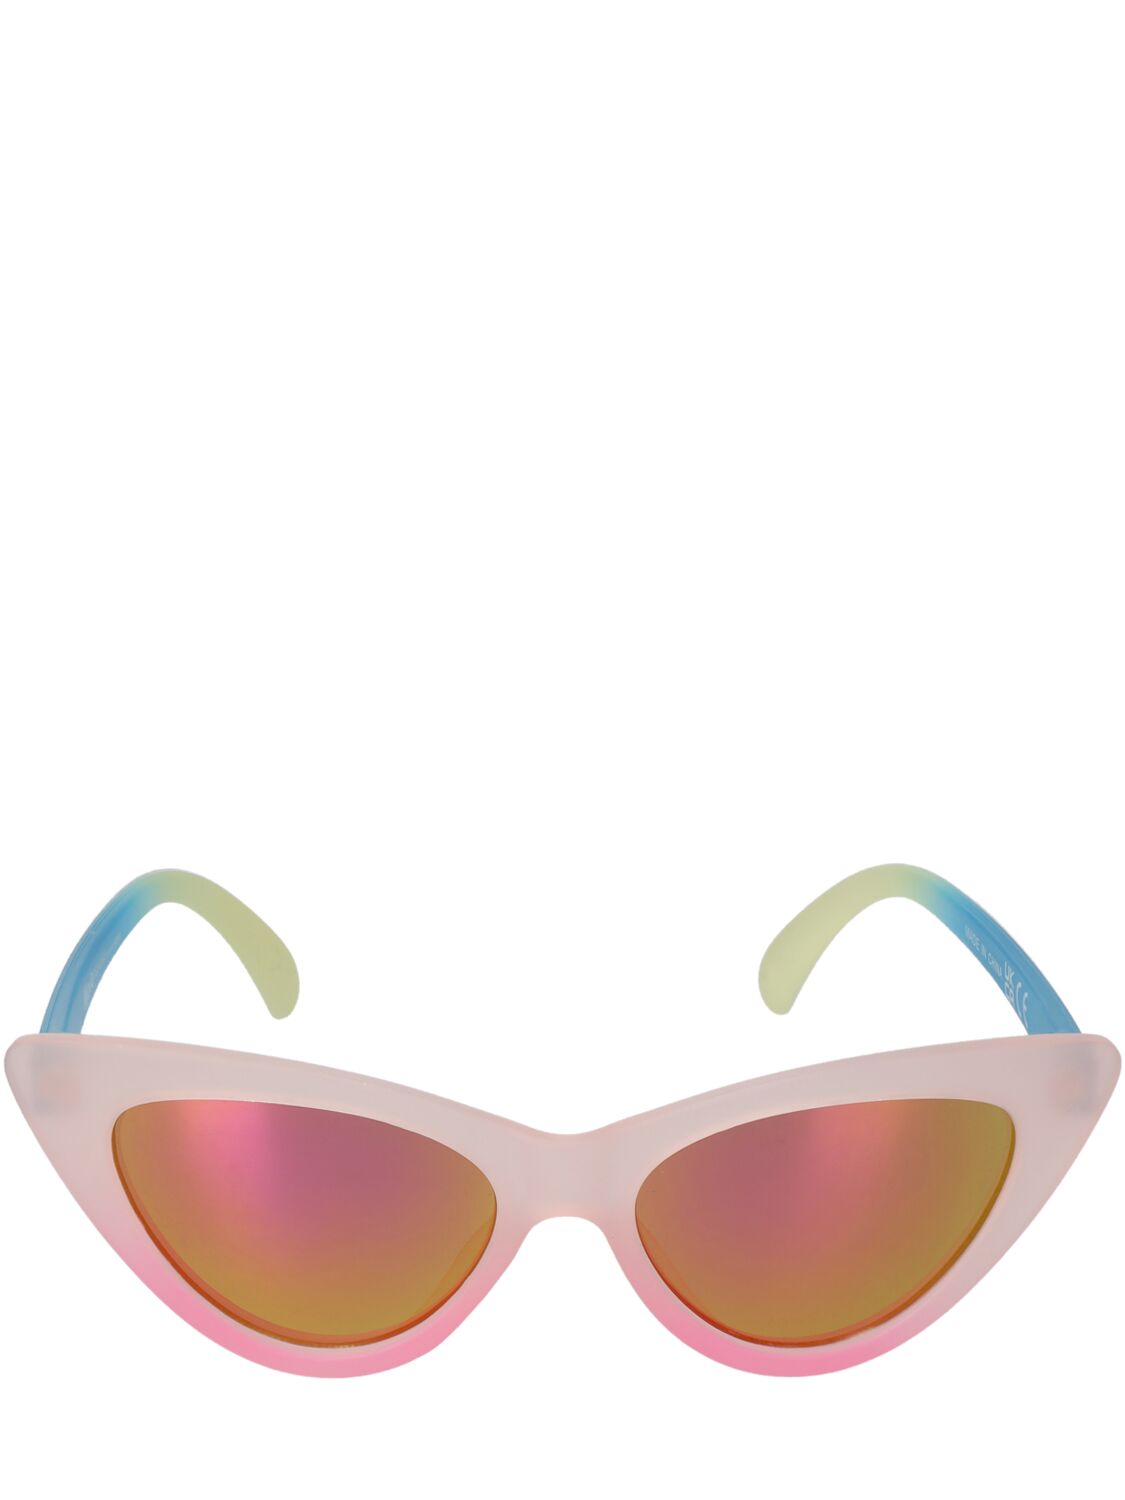 Image of Cat-eye Polycarbonate Sunglasses